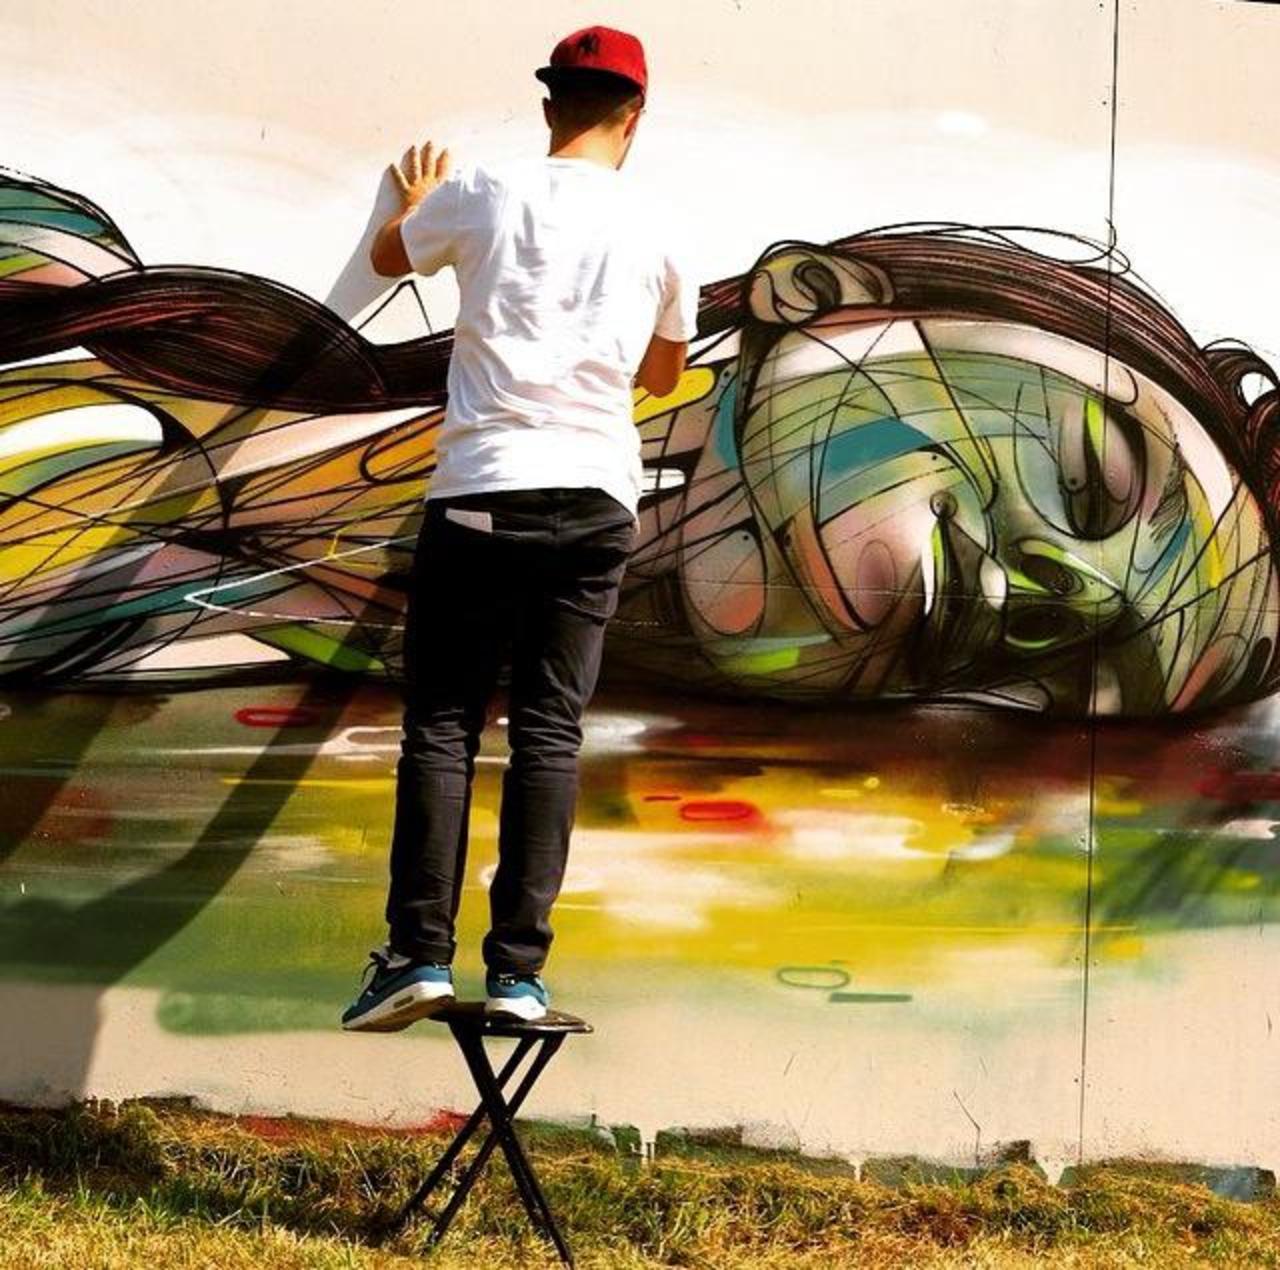 Street Art by the artist • Hopare 

#art #arte #graffiti #streetart http://t.co/IUOj8JMjOY